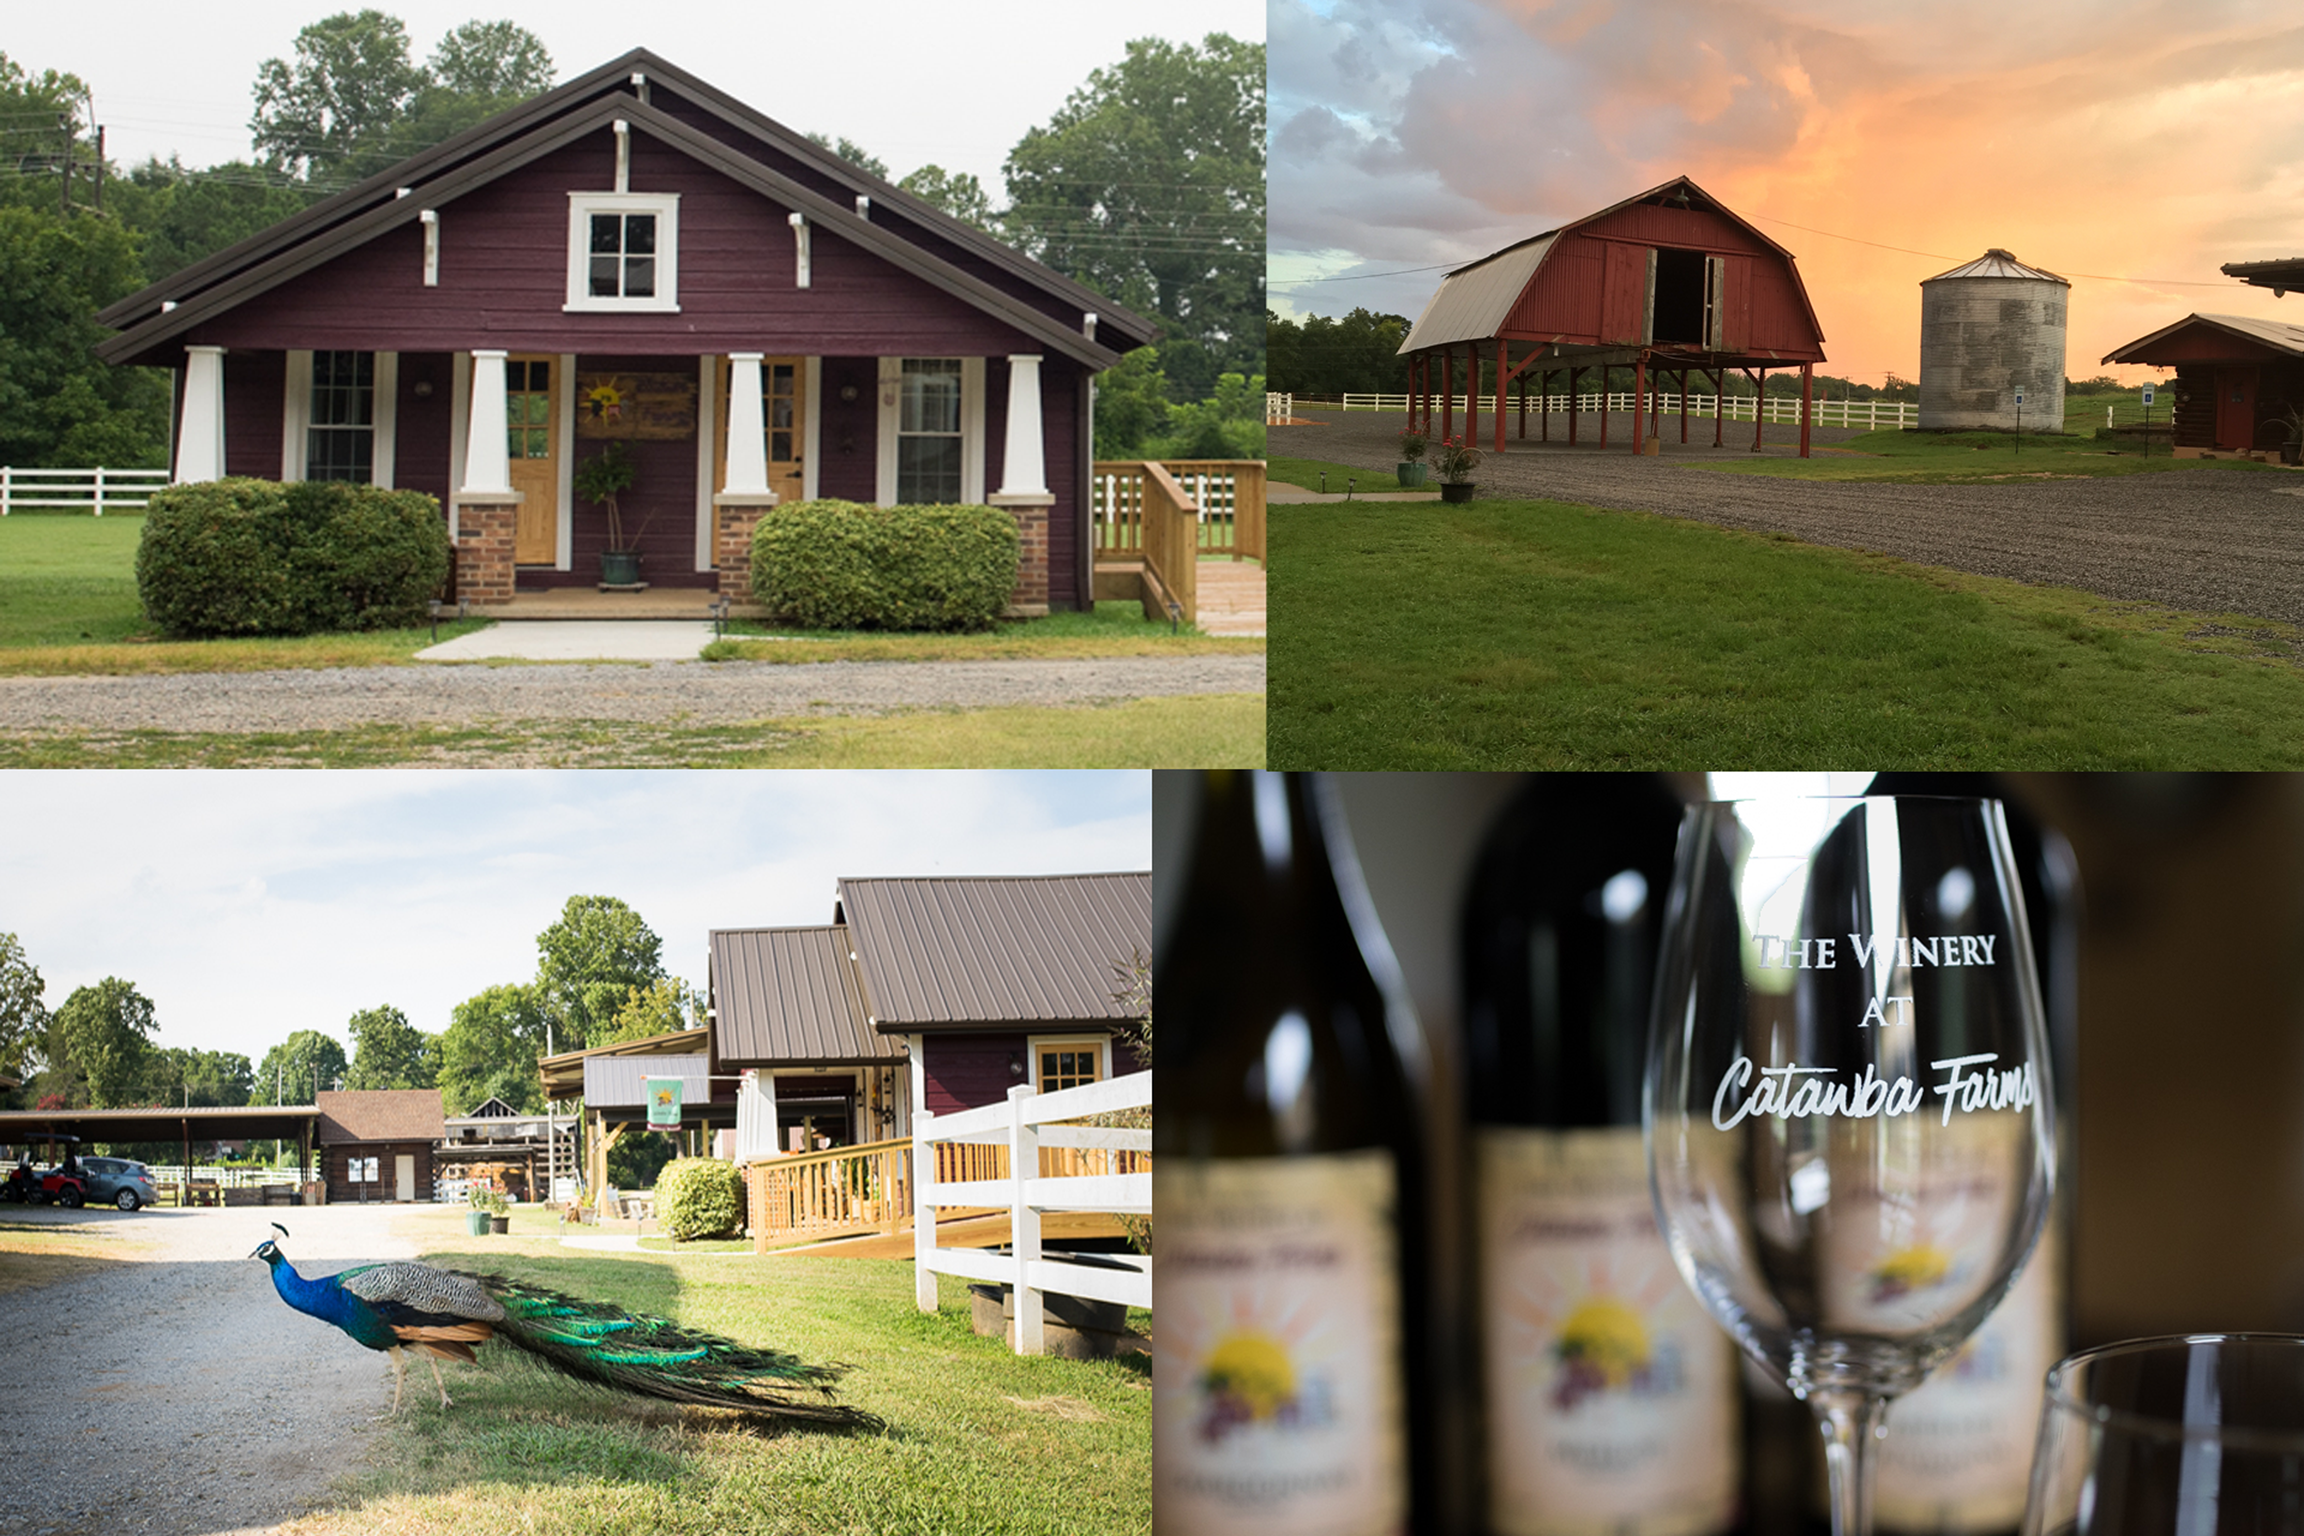 Vineyard & Winery Image Collage